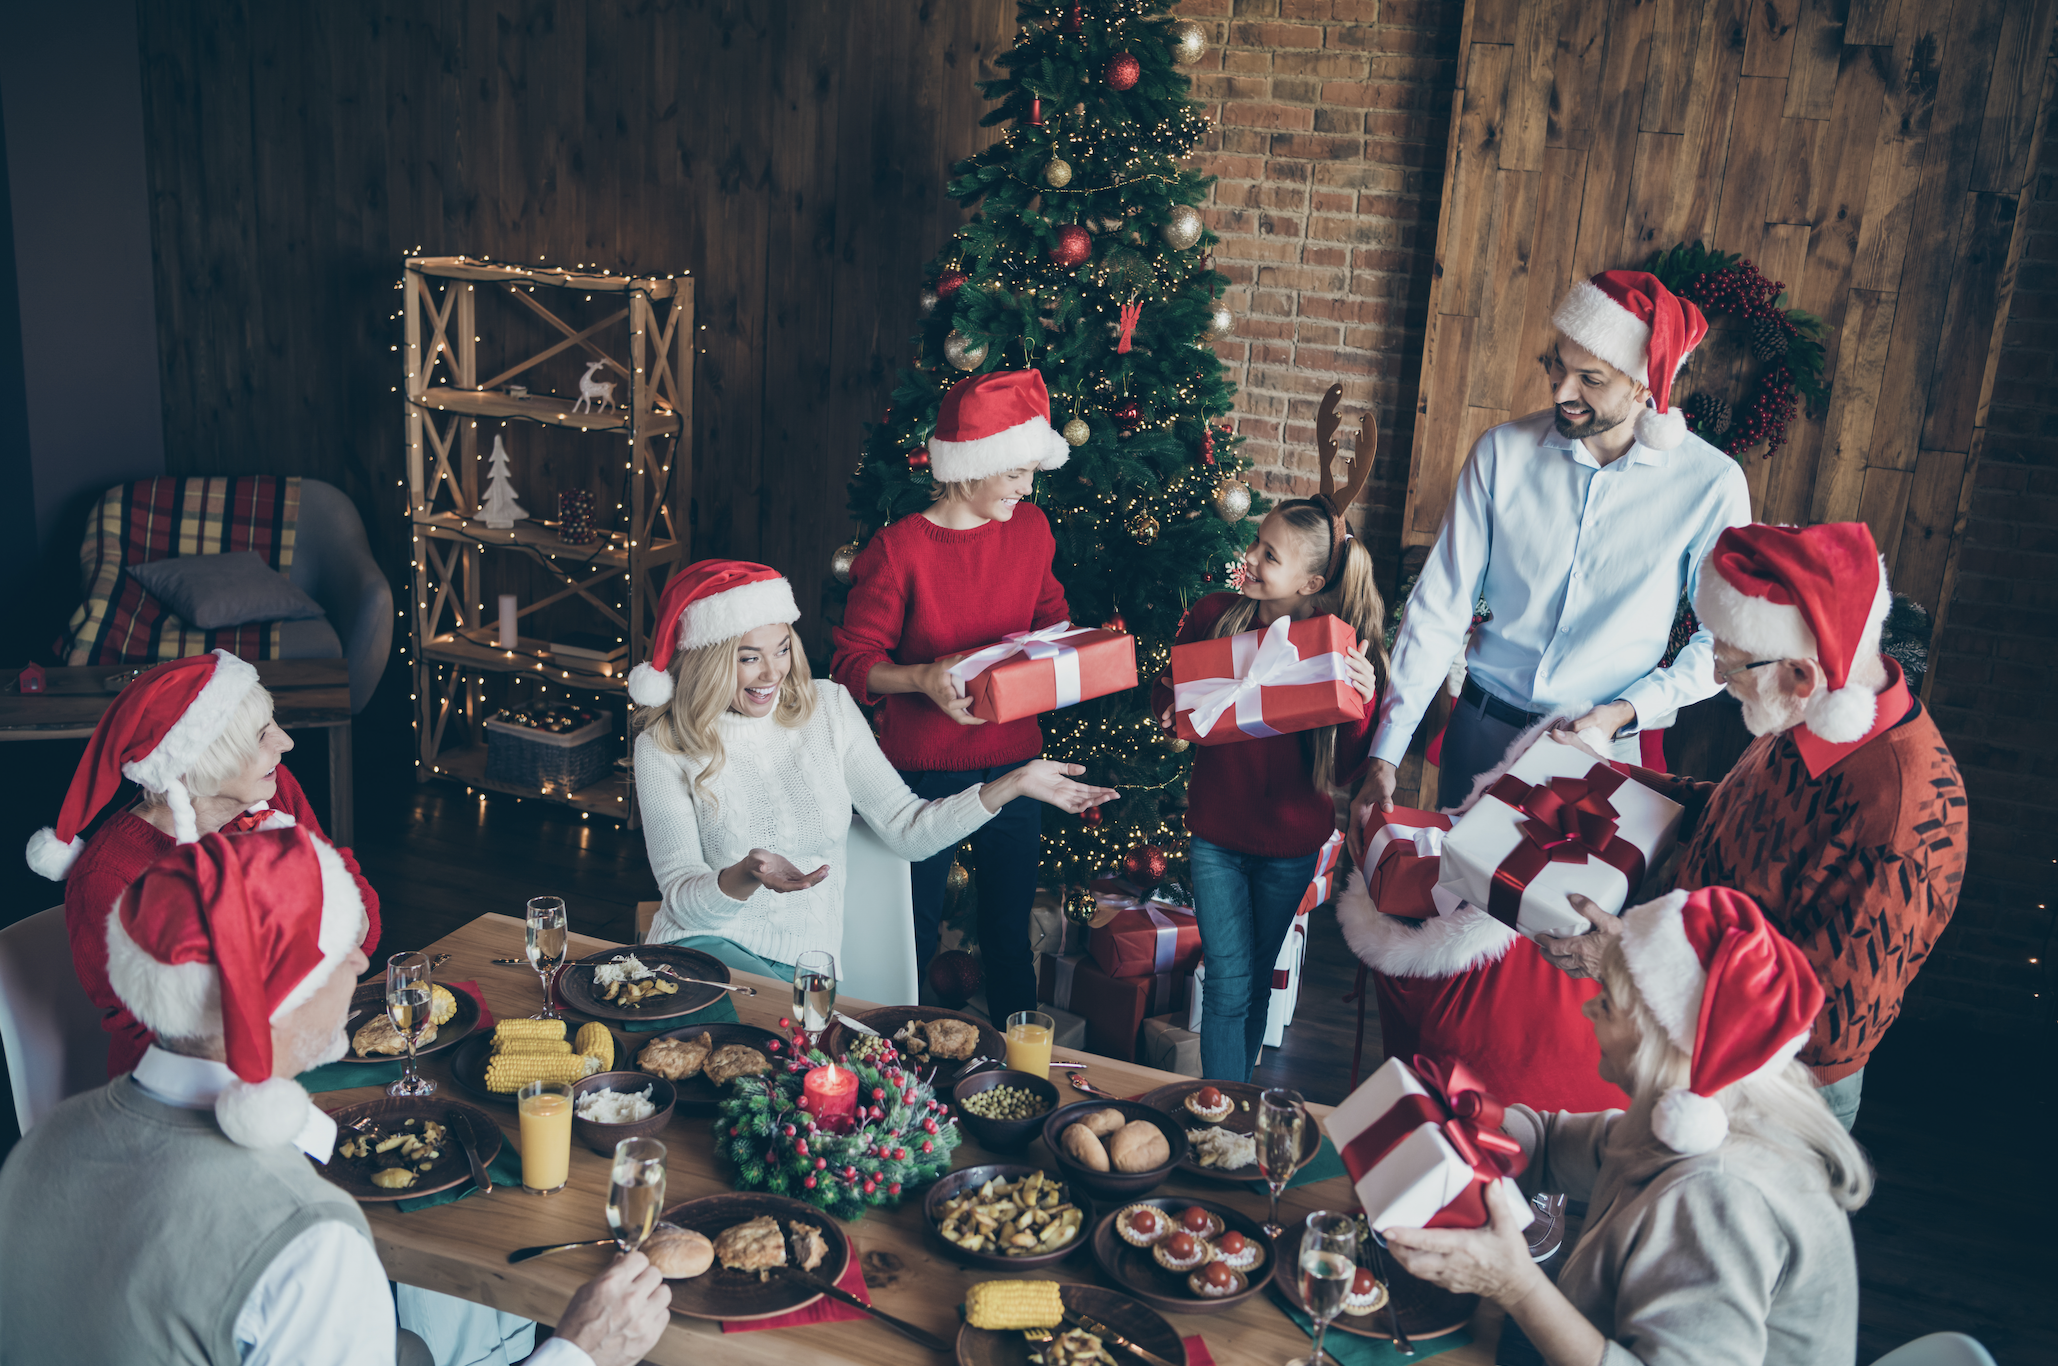 People exchange Christmas gifts | Source: Shutterstock